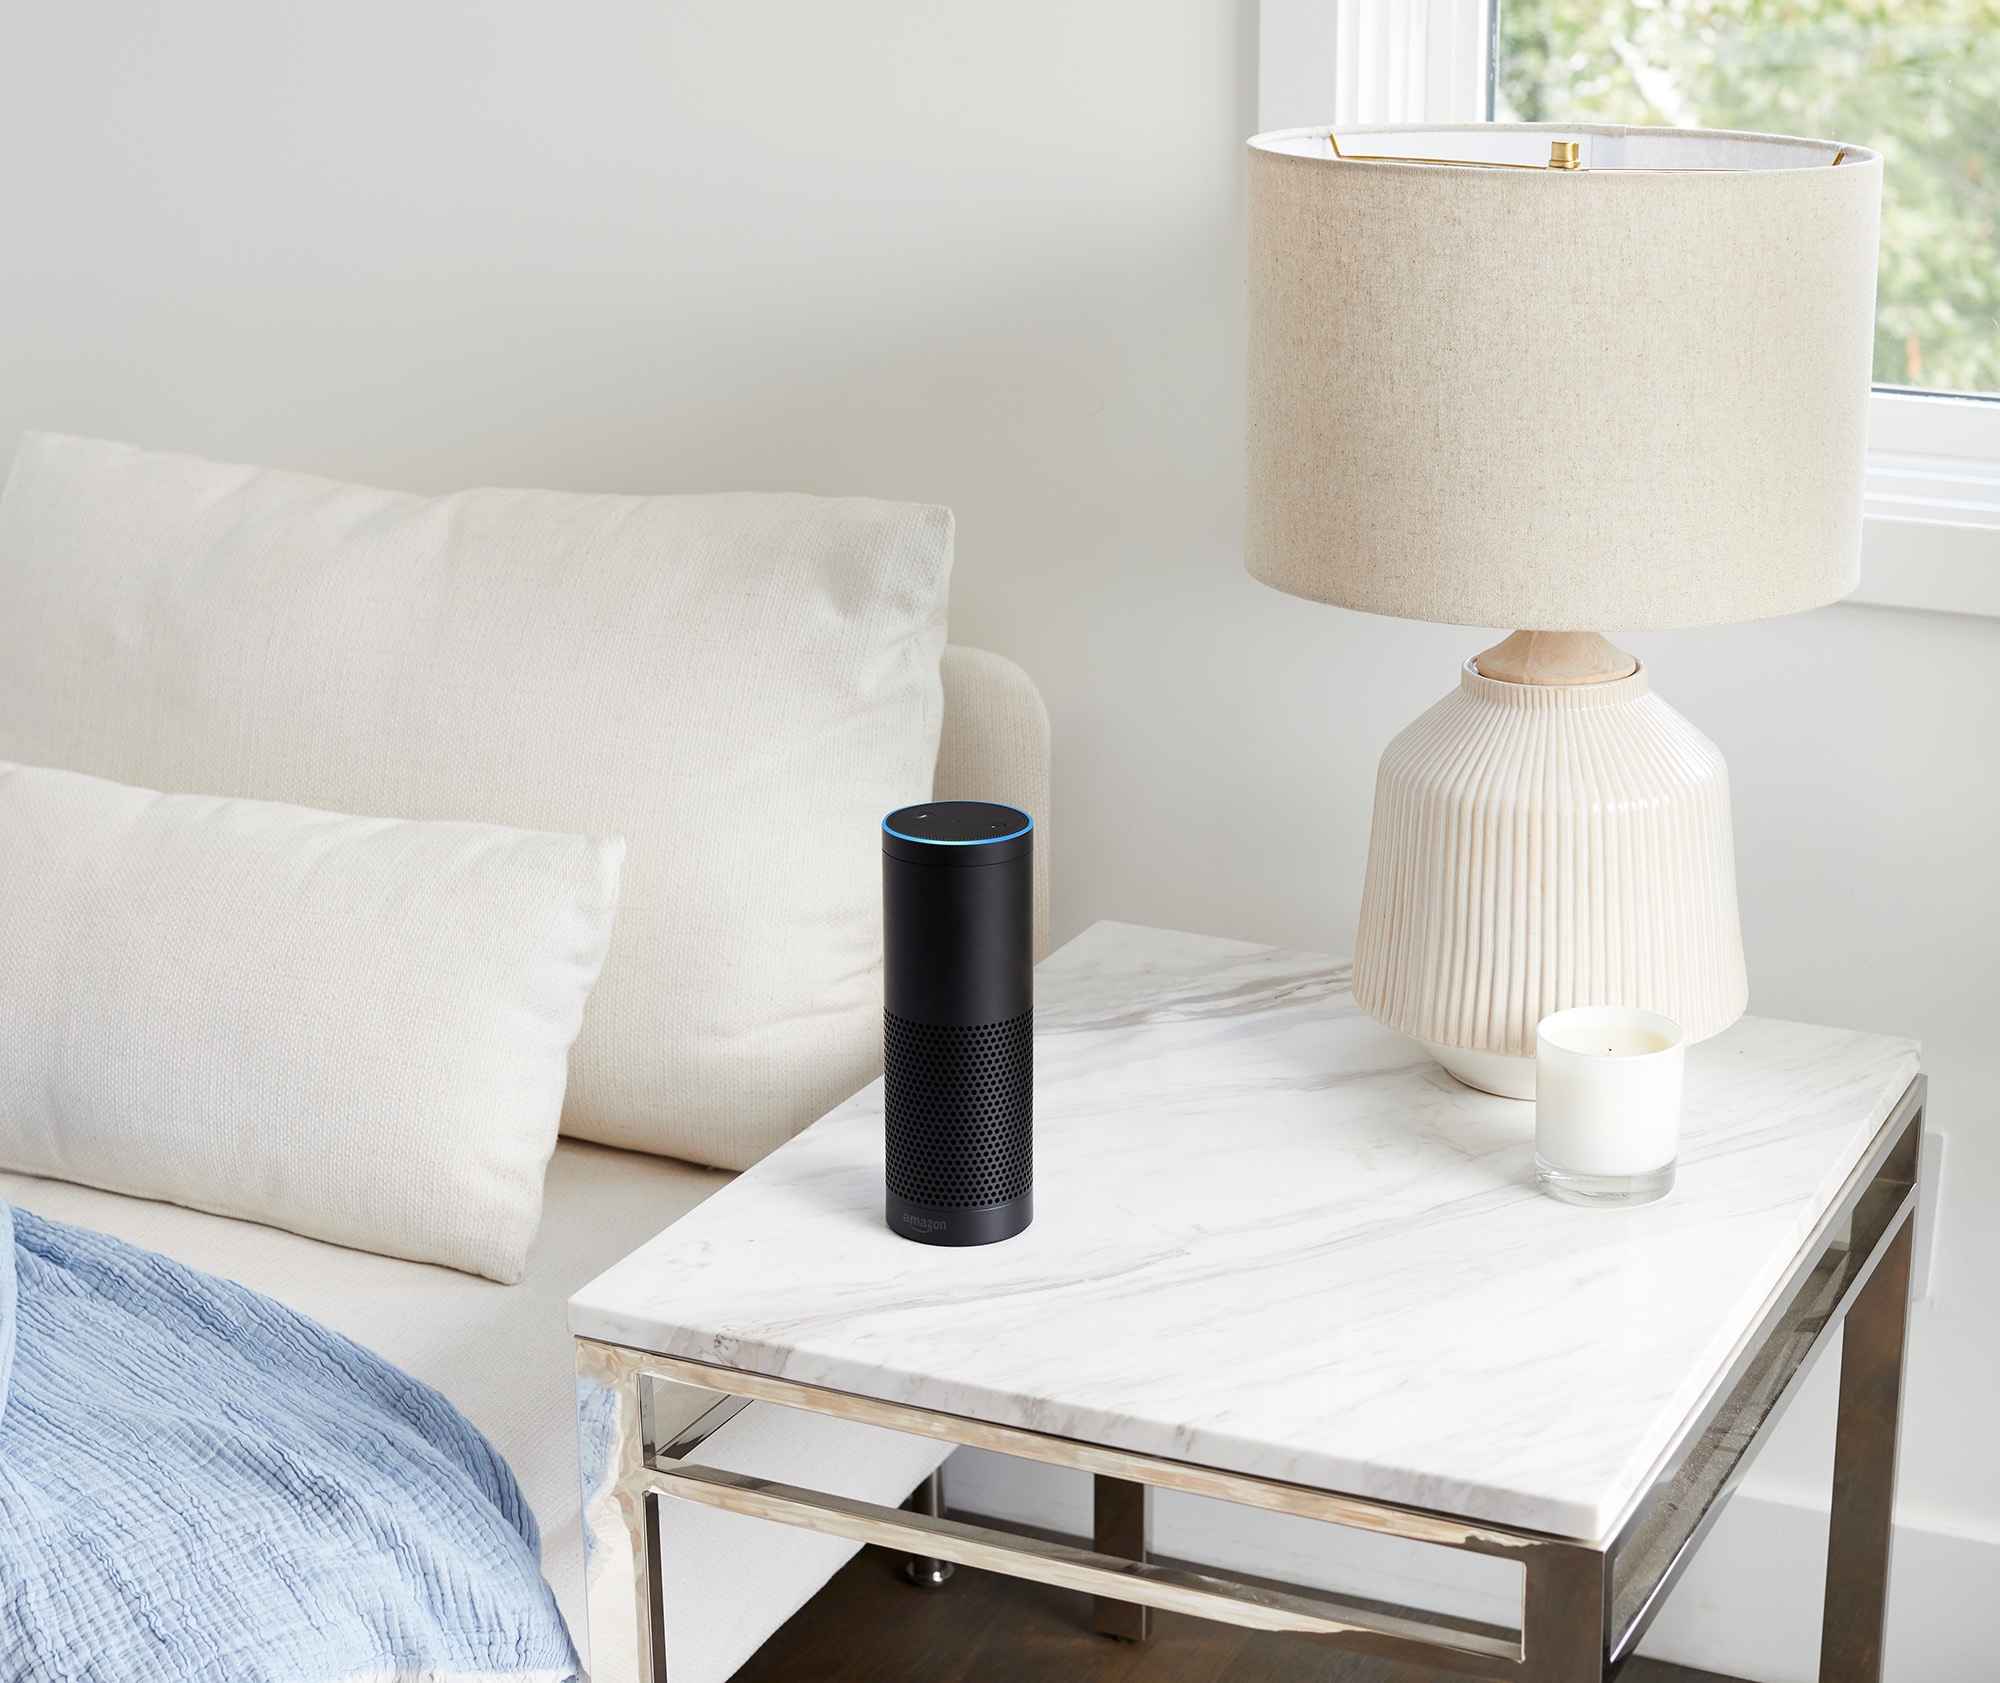 Amazon Echo, an Alexa-enabled device